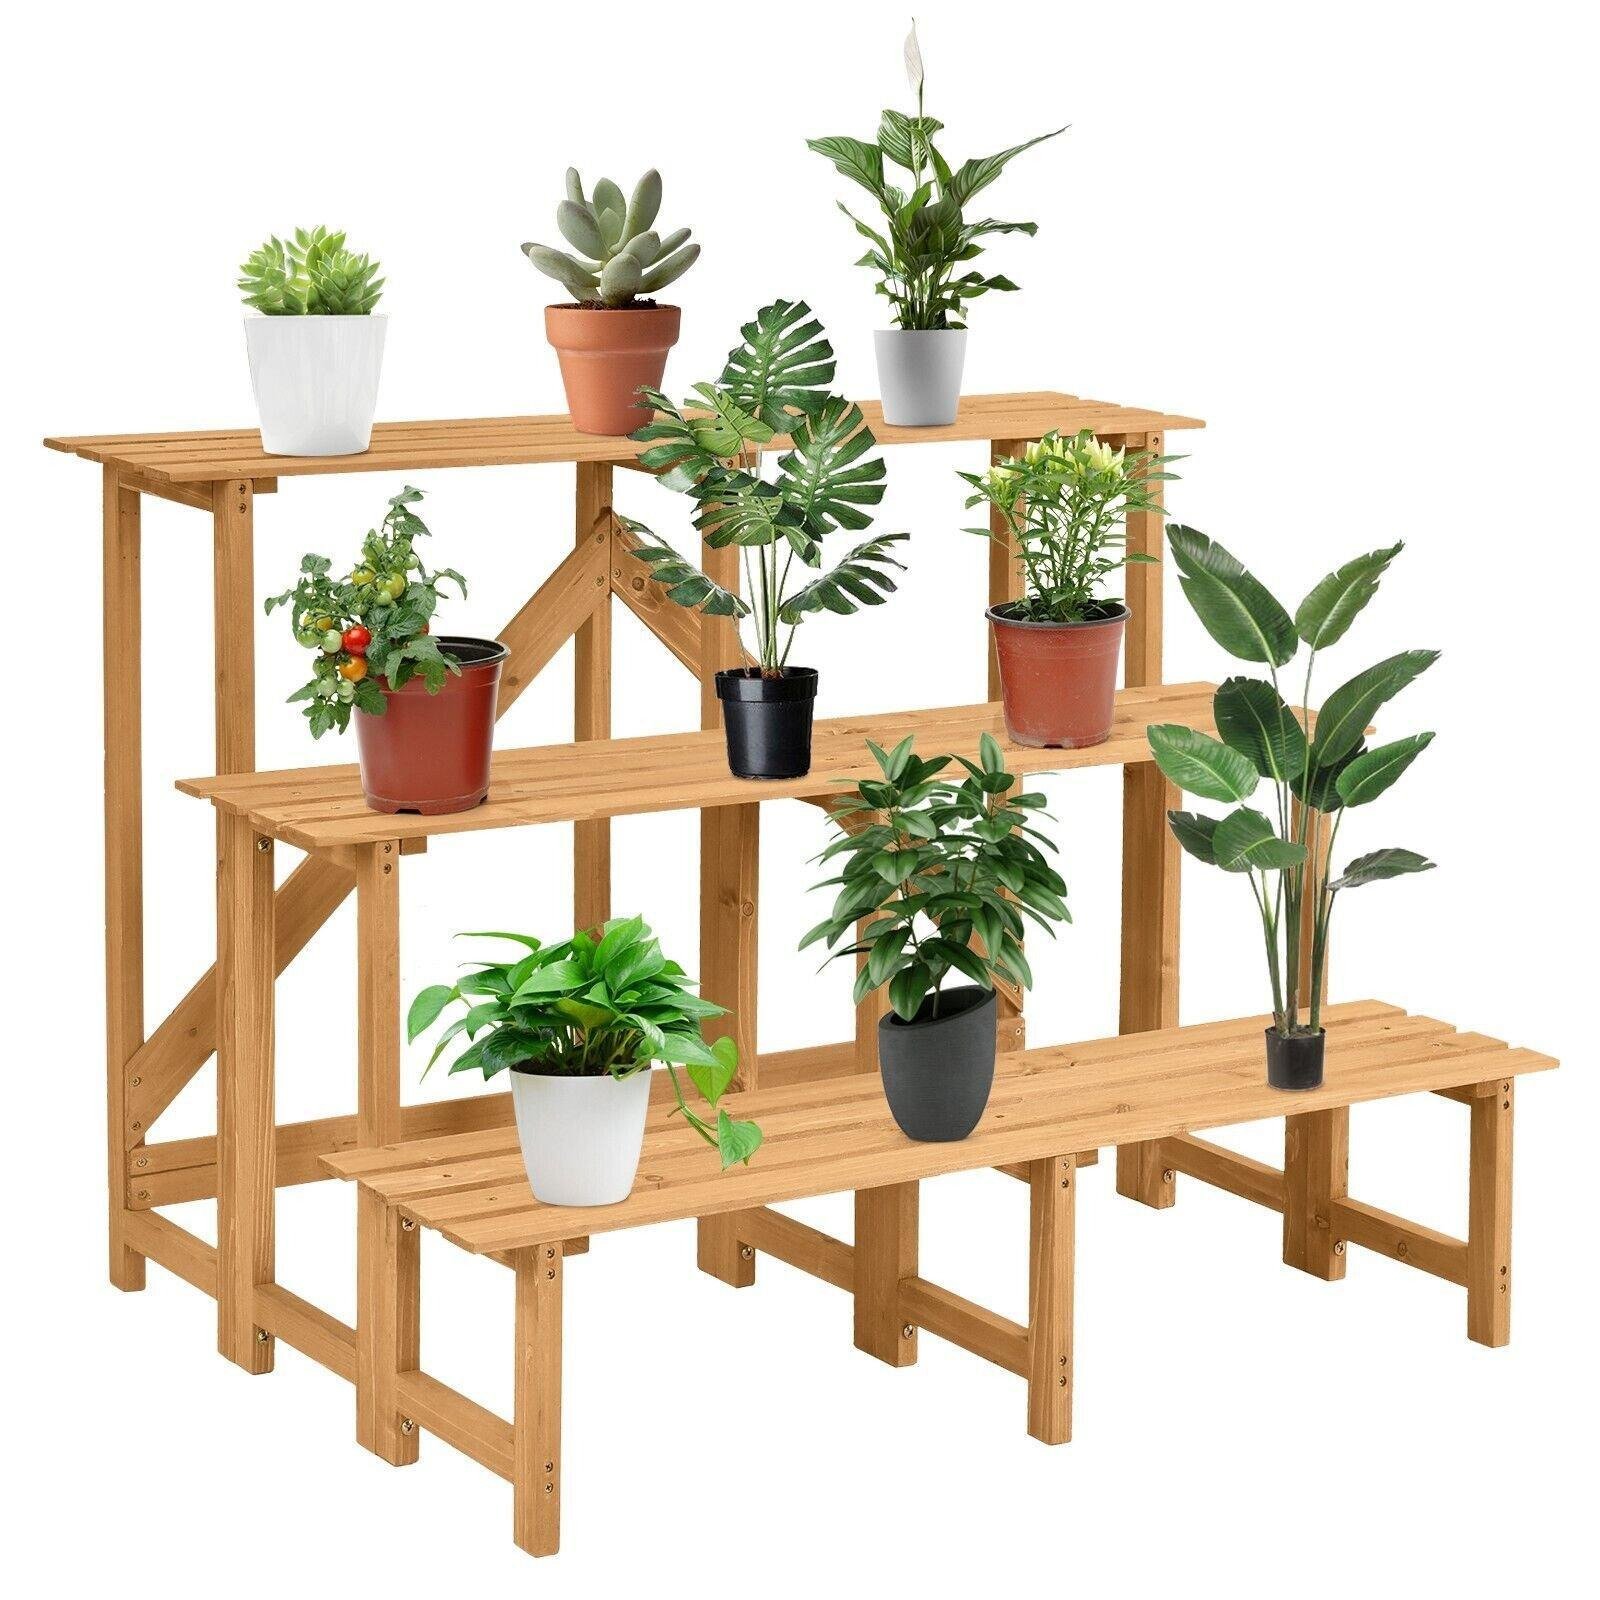 3-Tier Wooden Plant Stand Holder Flower Display Shelf Freestanding Ladder Rack - image 1